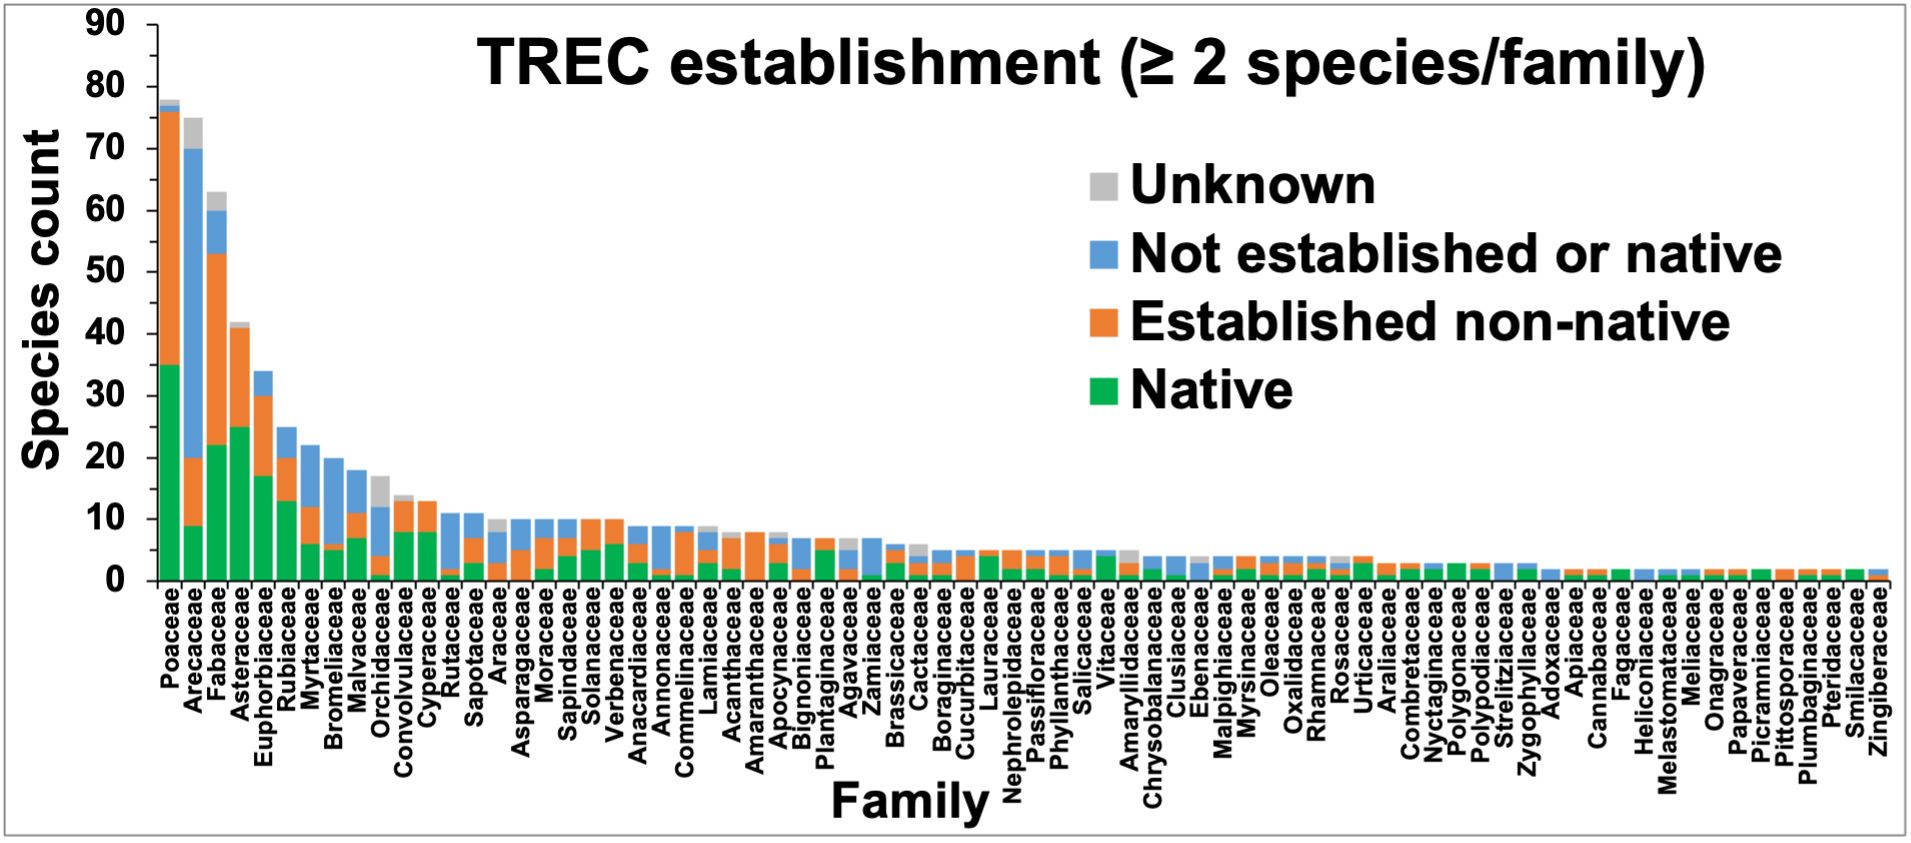 Figure 1. Numbers of species and UF/IFAS TREC establishment per plant family.